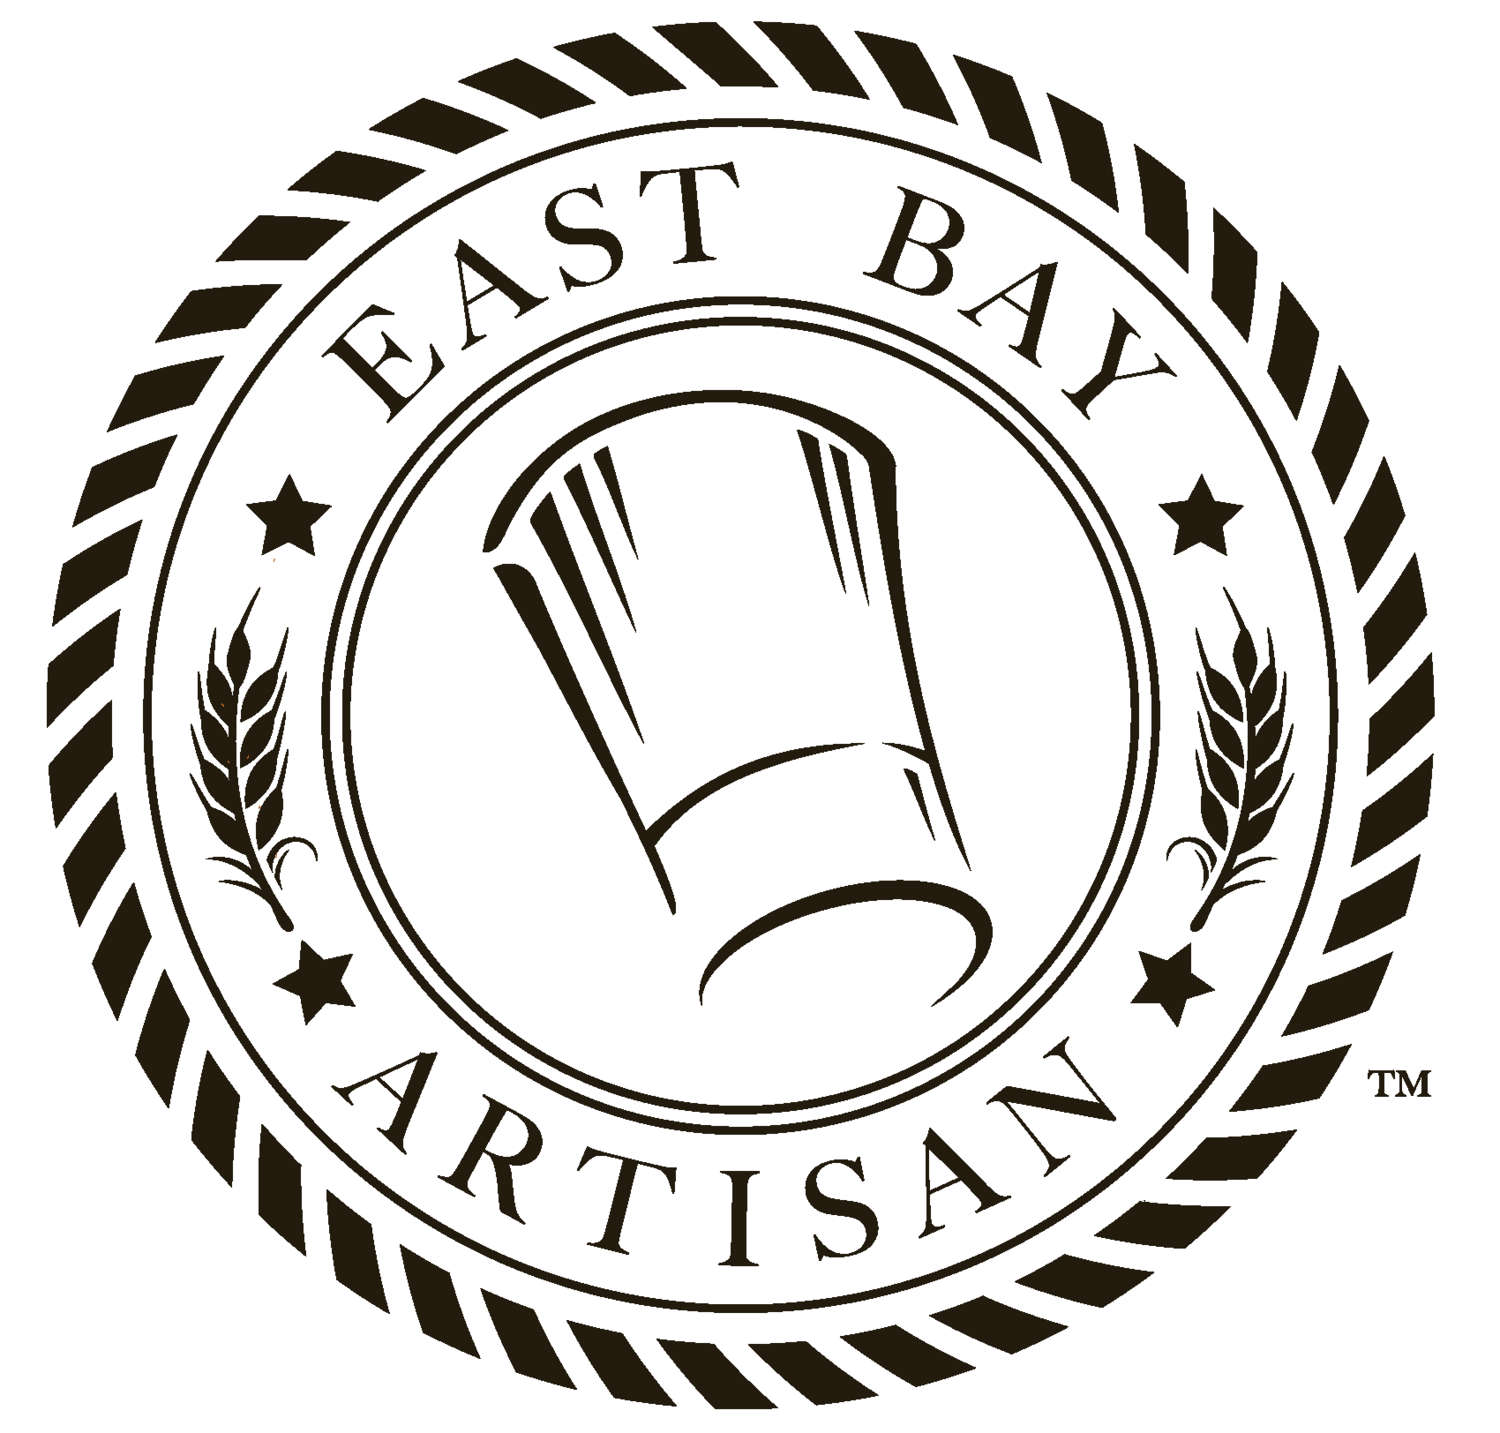 East Bay Artisan